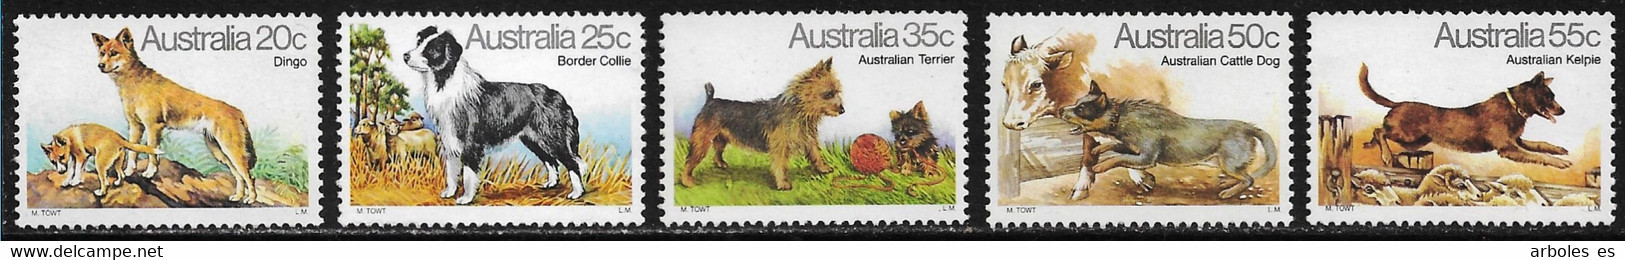 AUSTRALIA - PERROS DE AUSTRALIA - AÑO 1980 - Nº CATALOGO YVERT 0689-93 - NUEVOS - Mint Stamps